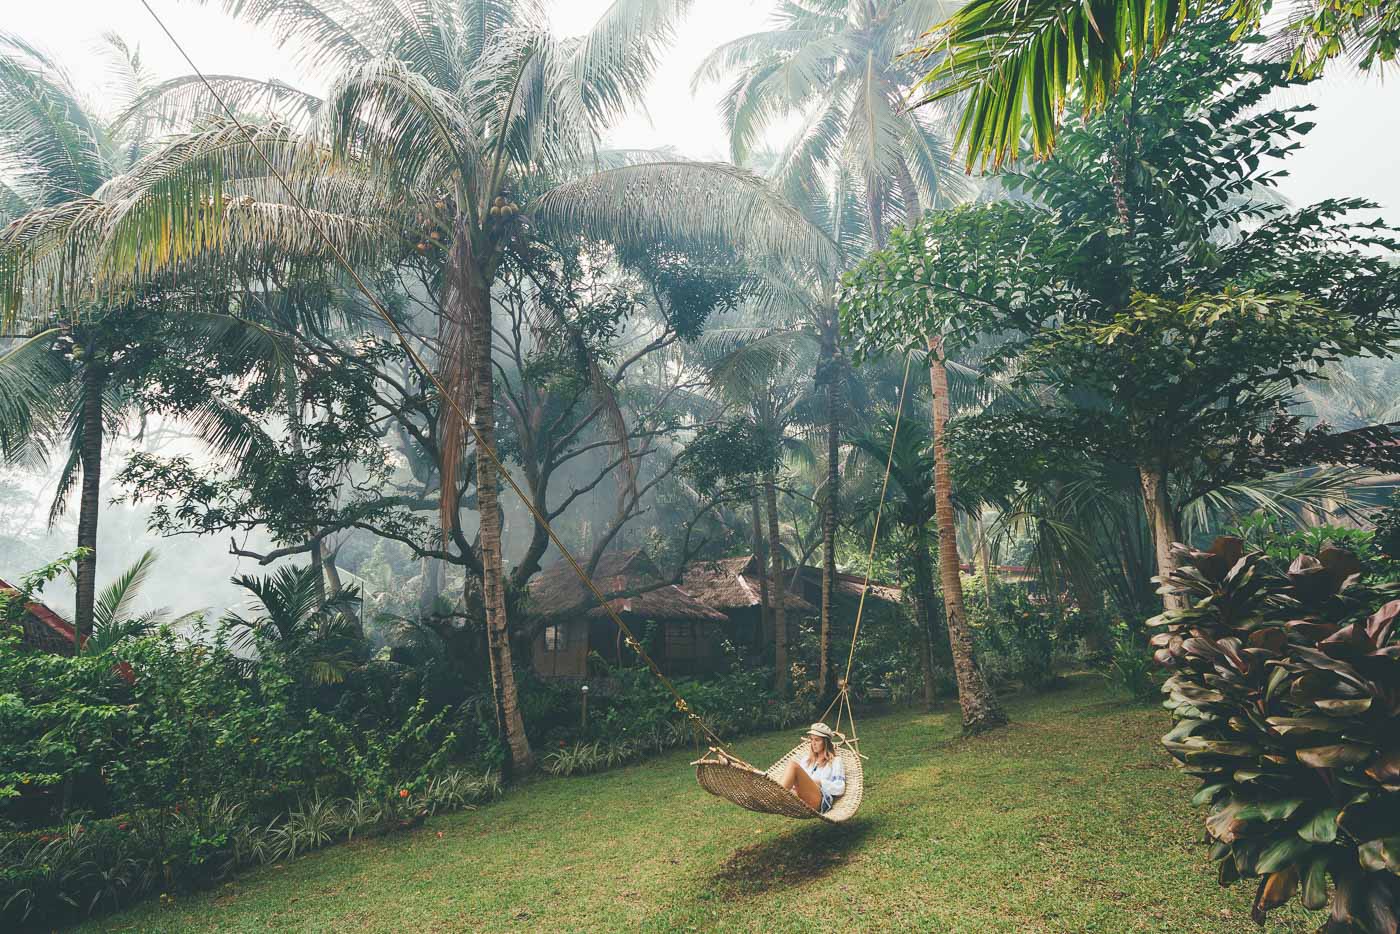 Jess Davis swinging in a hammock in the Philippines